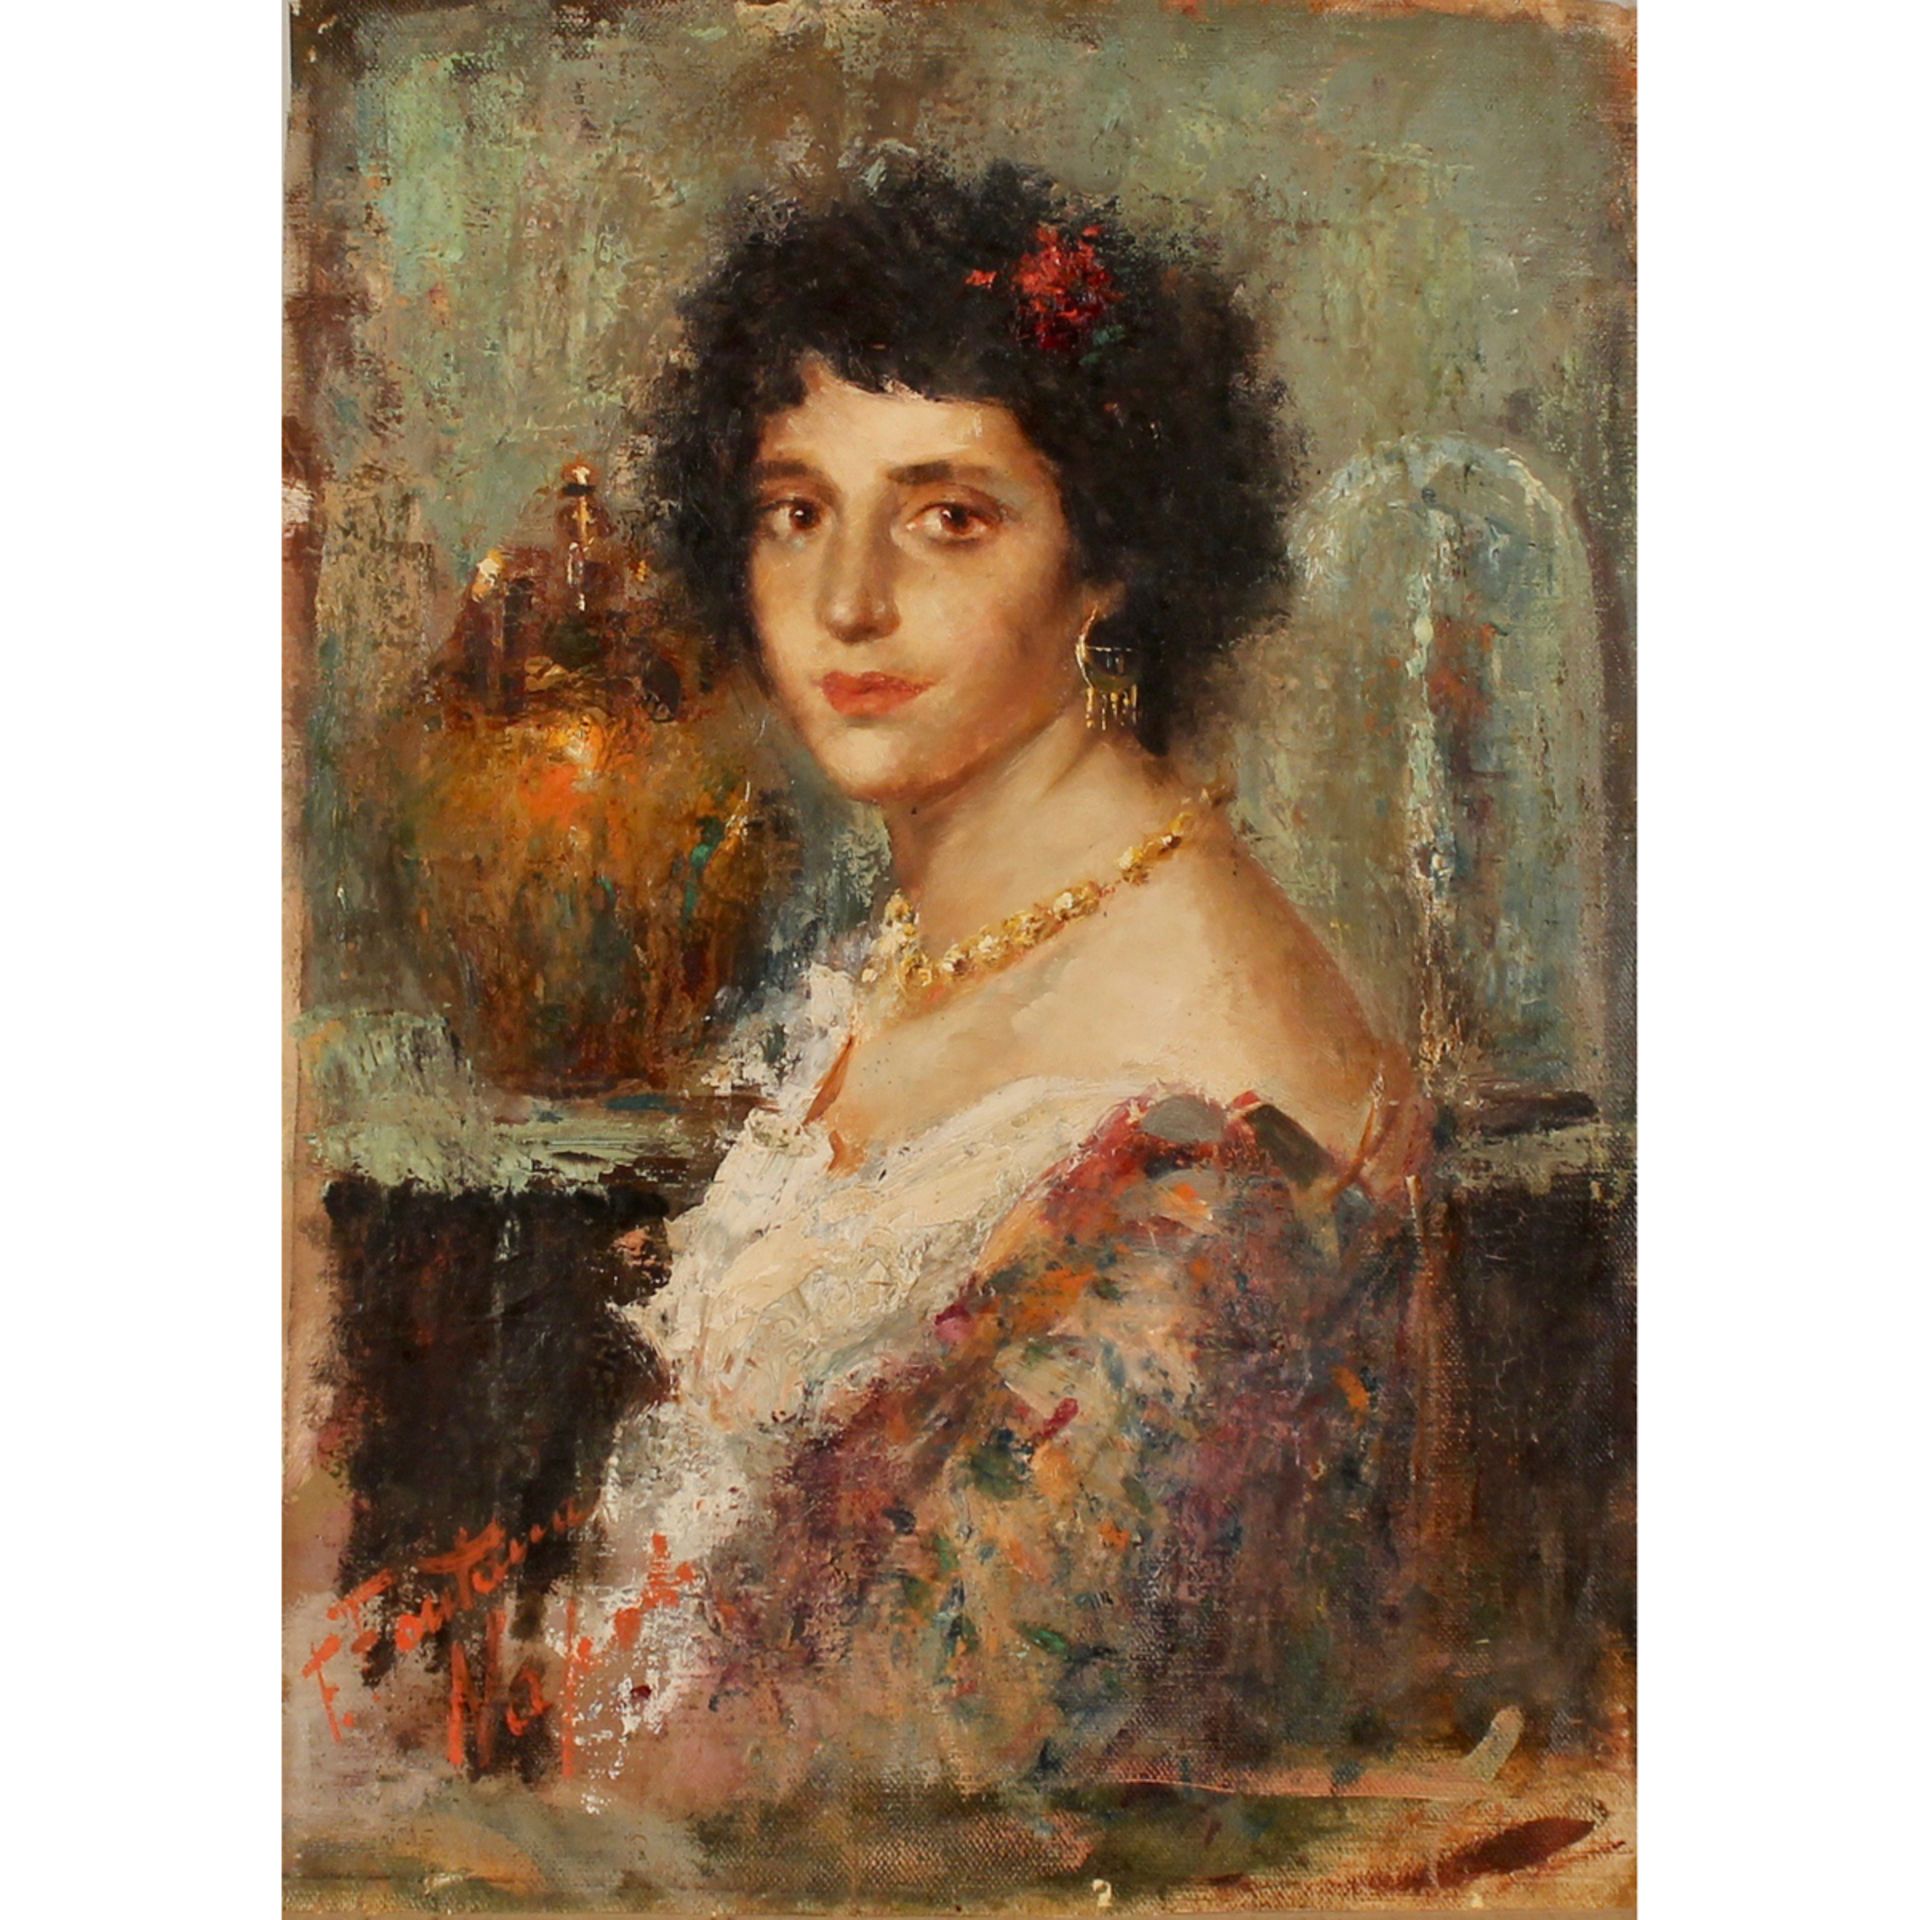 FRANCESCO FONTANA (1843-1876) "Figura di donna" - "Woman figure"